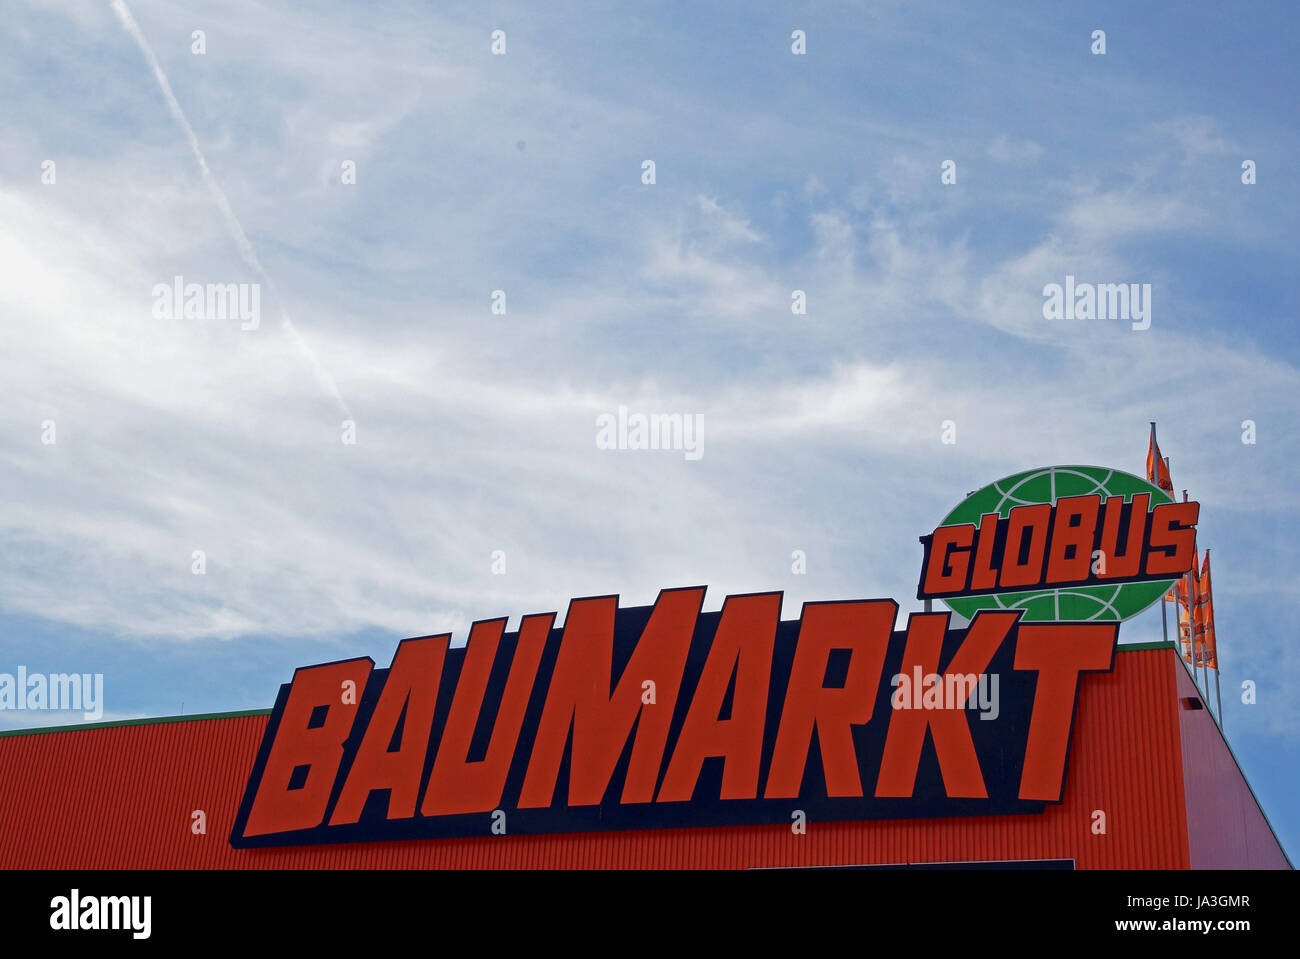 Logo Globus Baumarkt / logo Globus DIY market Stock Photo